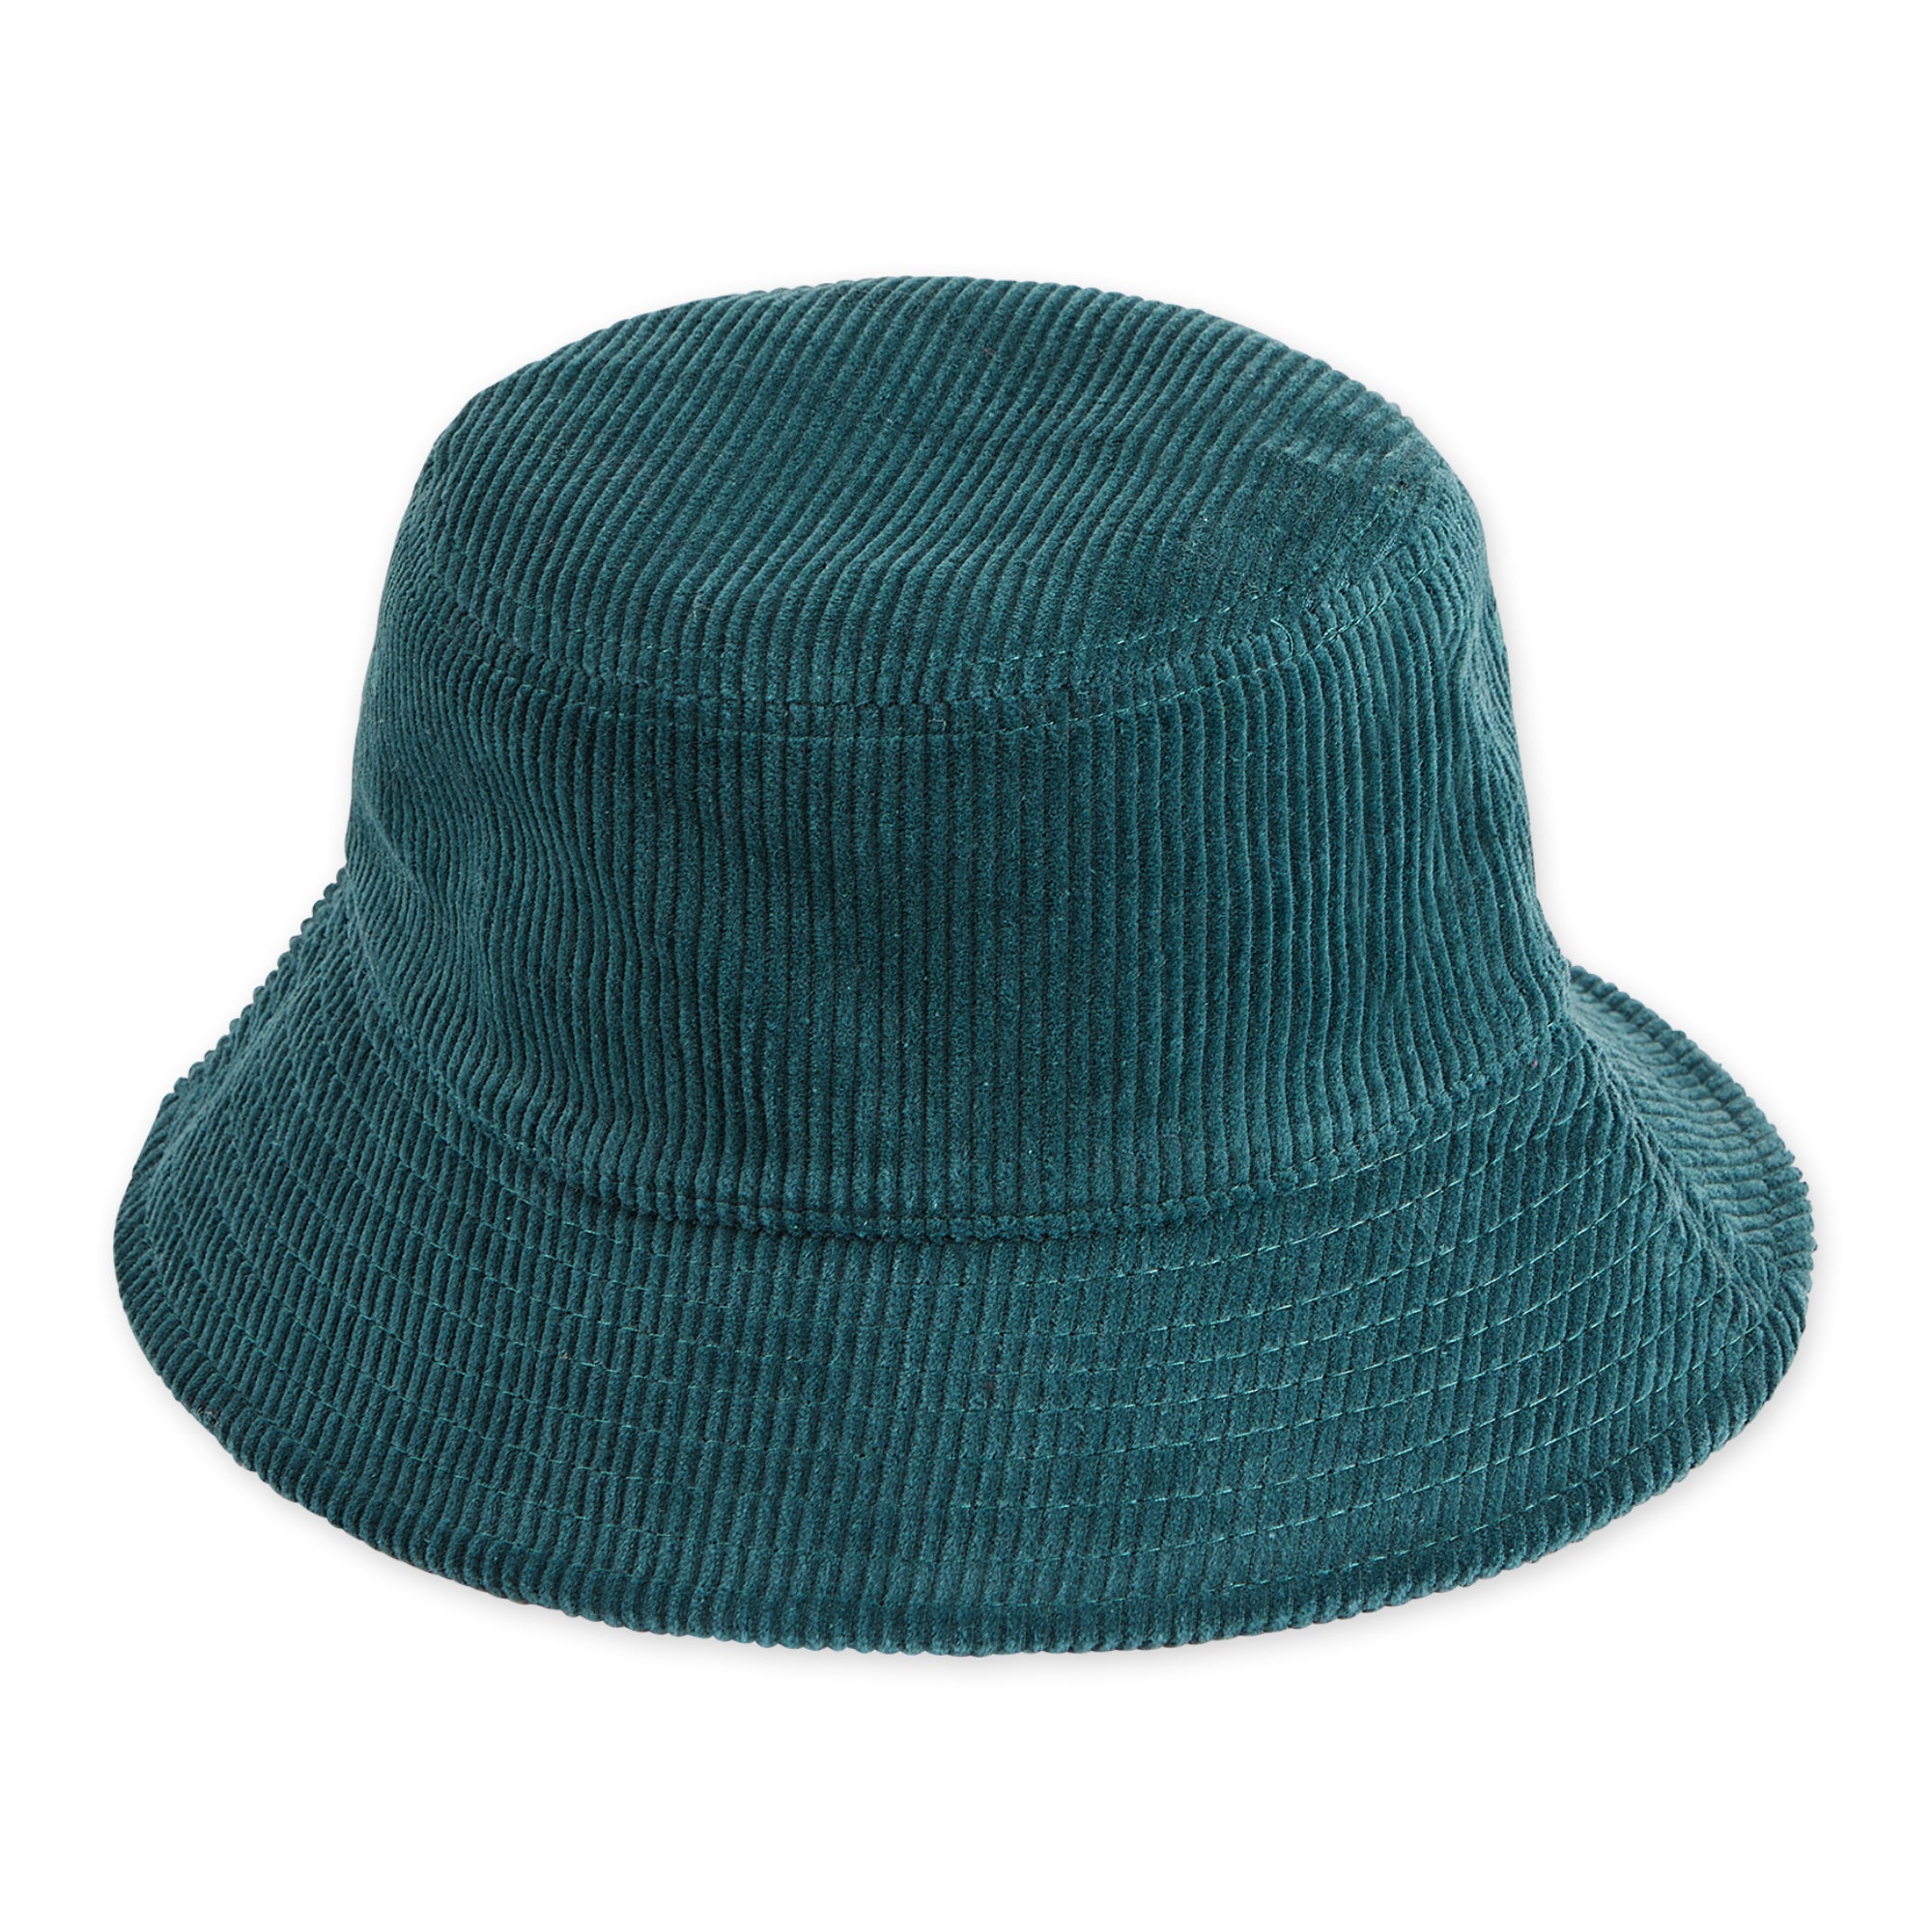 Corduroy Polyester Bucket Hat - Teal Green